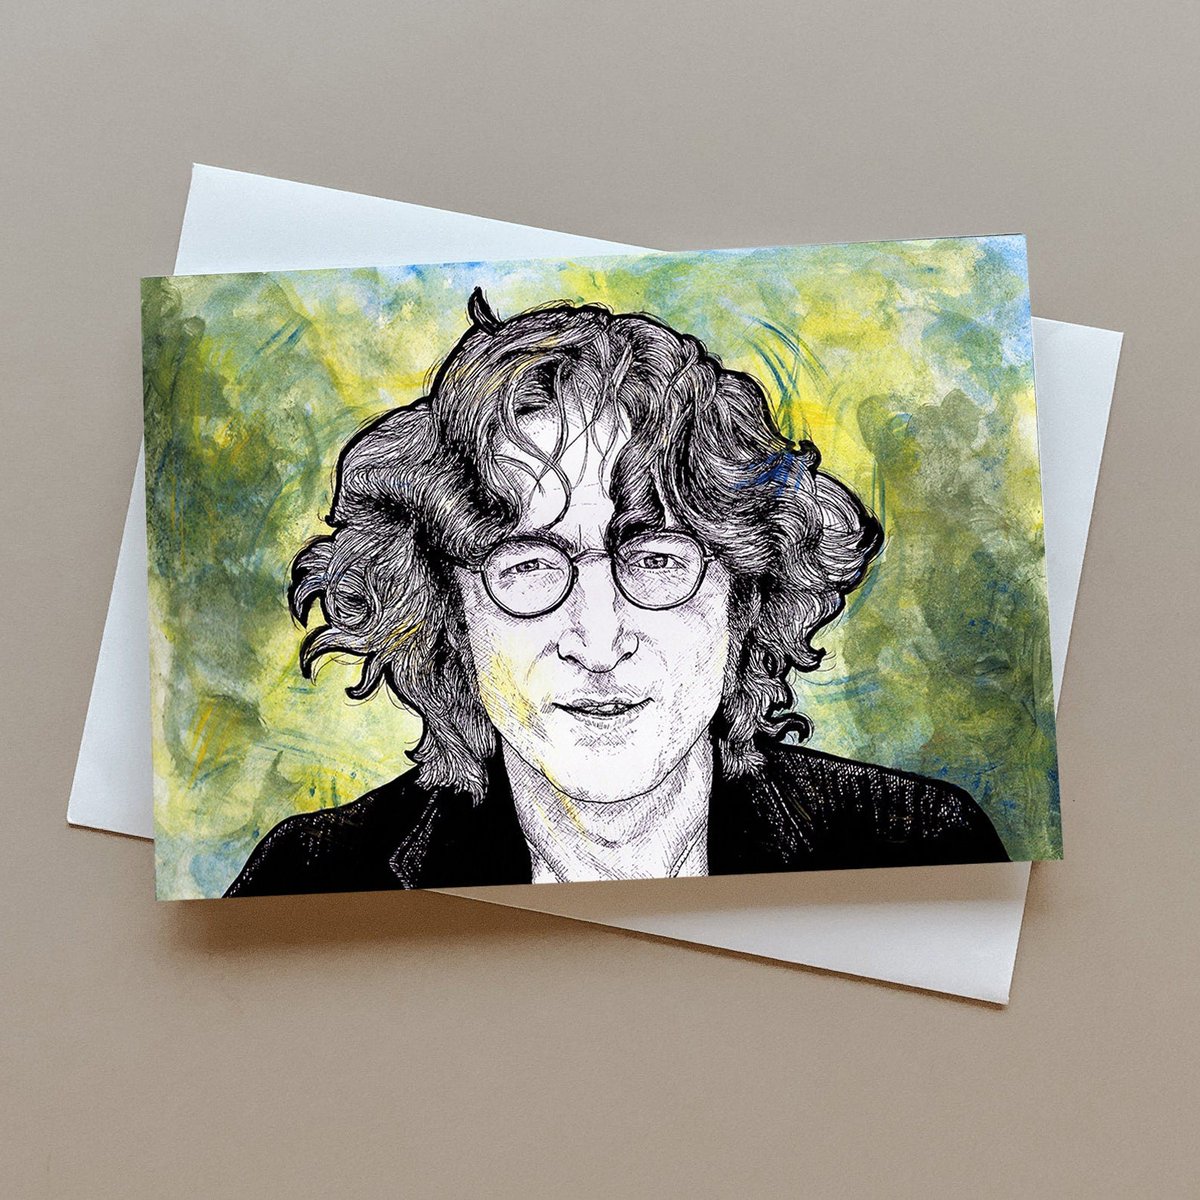 John Lennon greeting card, The Beatles, Birthday card, music card, personalised card, John Lennon gift tuppu.net/4dce3f5d #newWave #wallArt #giftideas #greetingcards #popCulture #PersonalisedCard